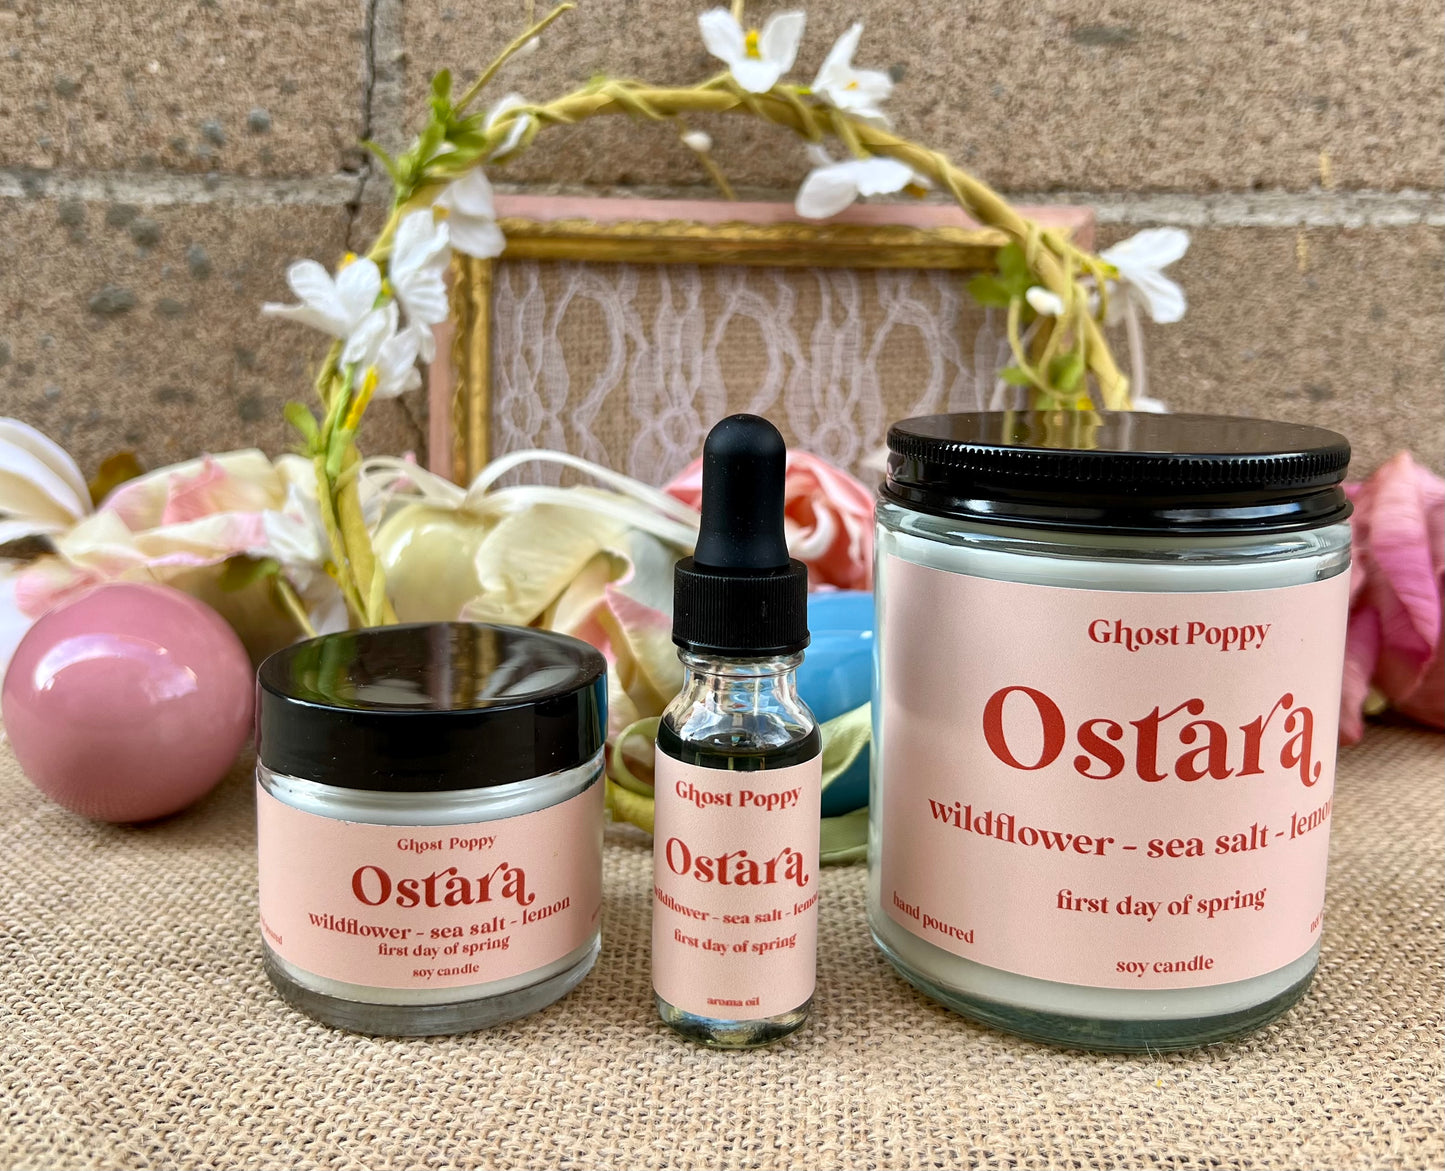 Ostara Aroma Oil - Spring Equinox Fragrance Oil